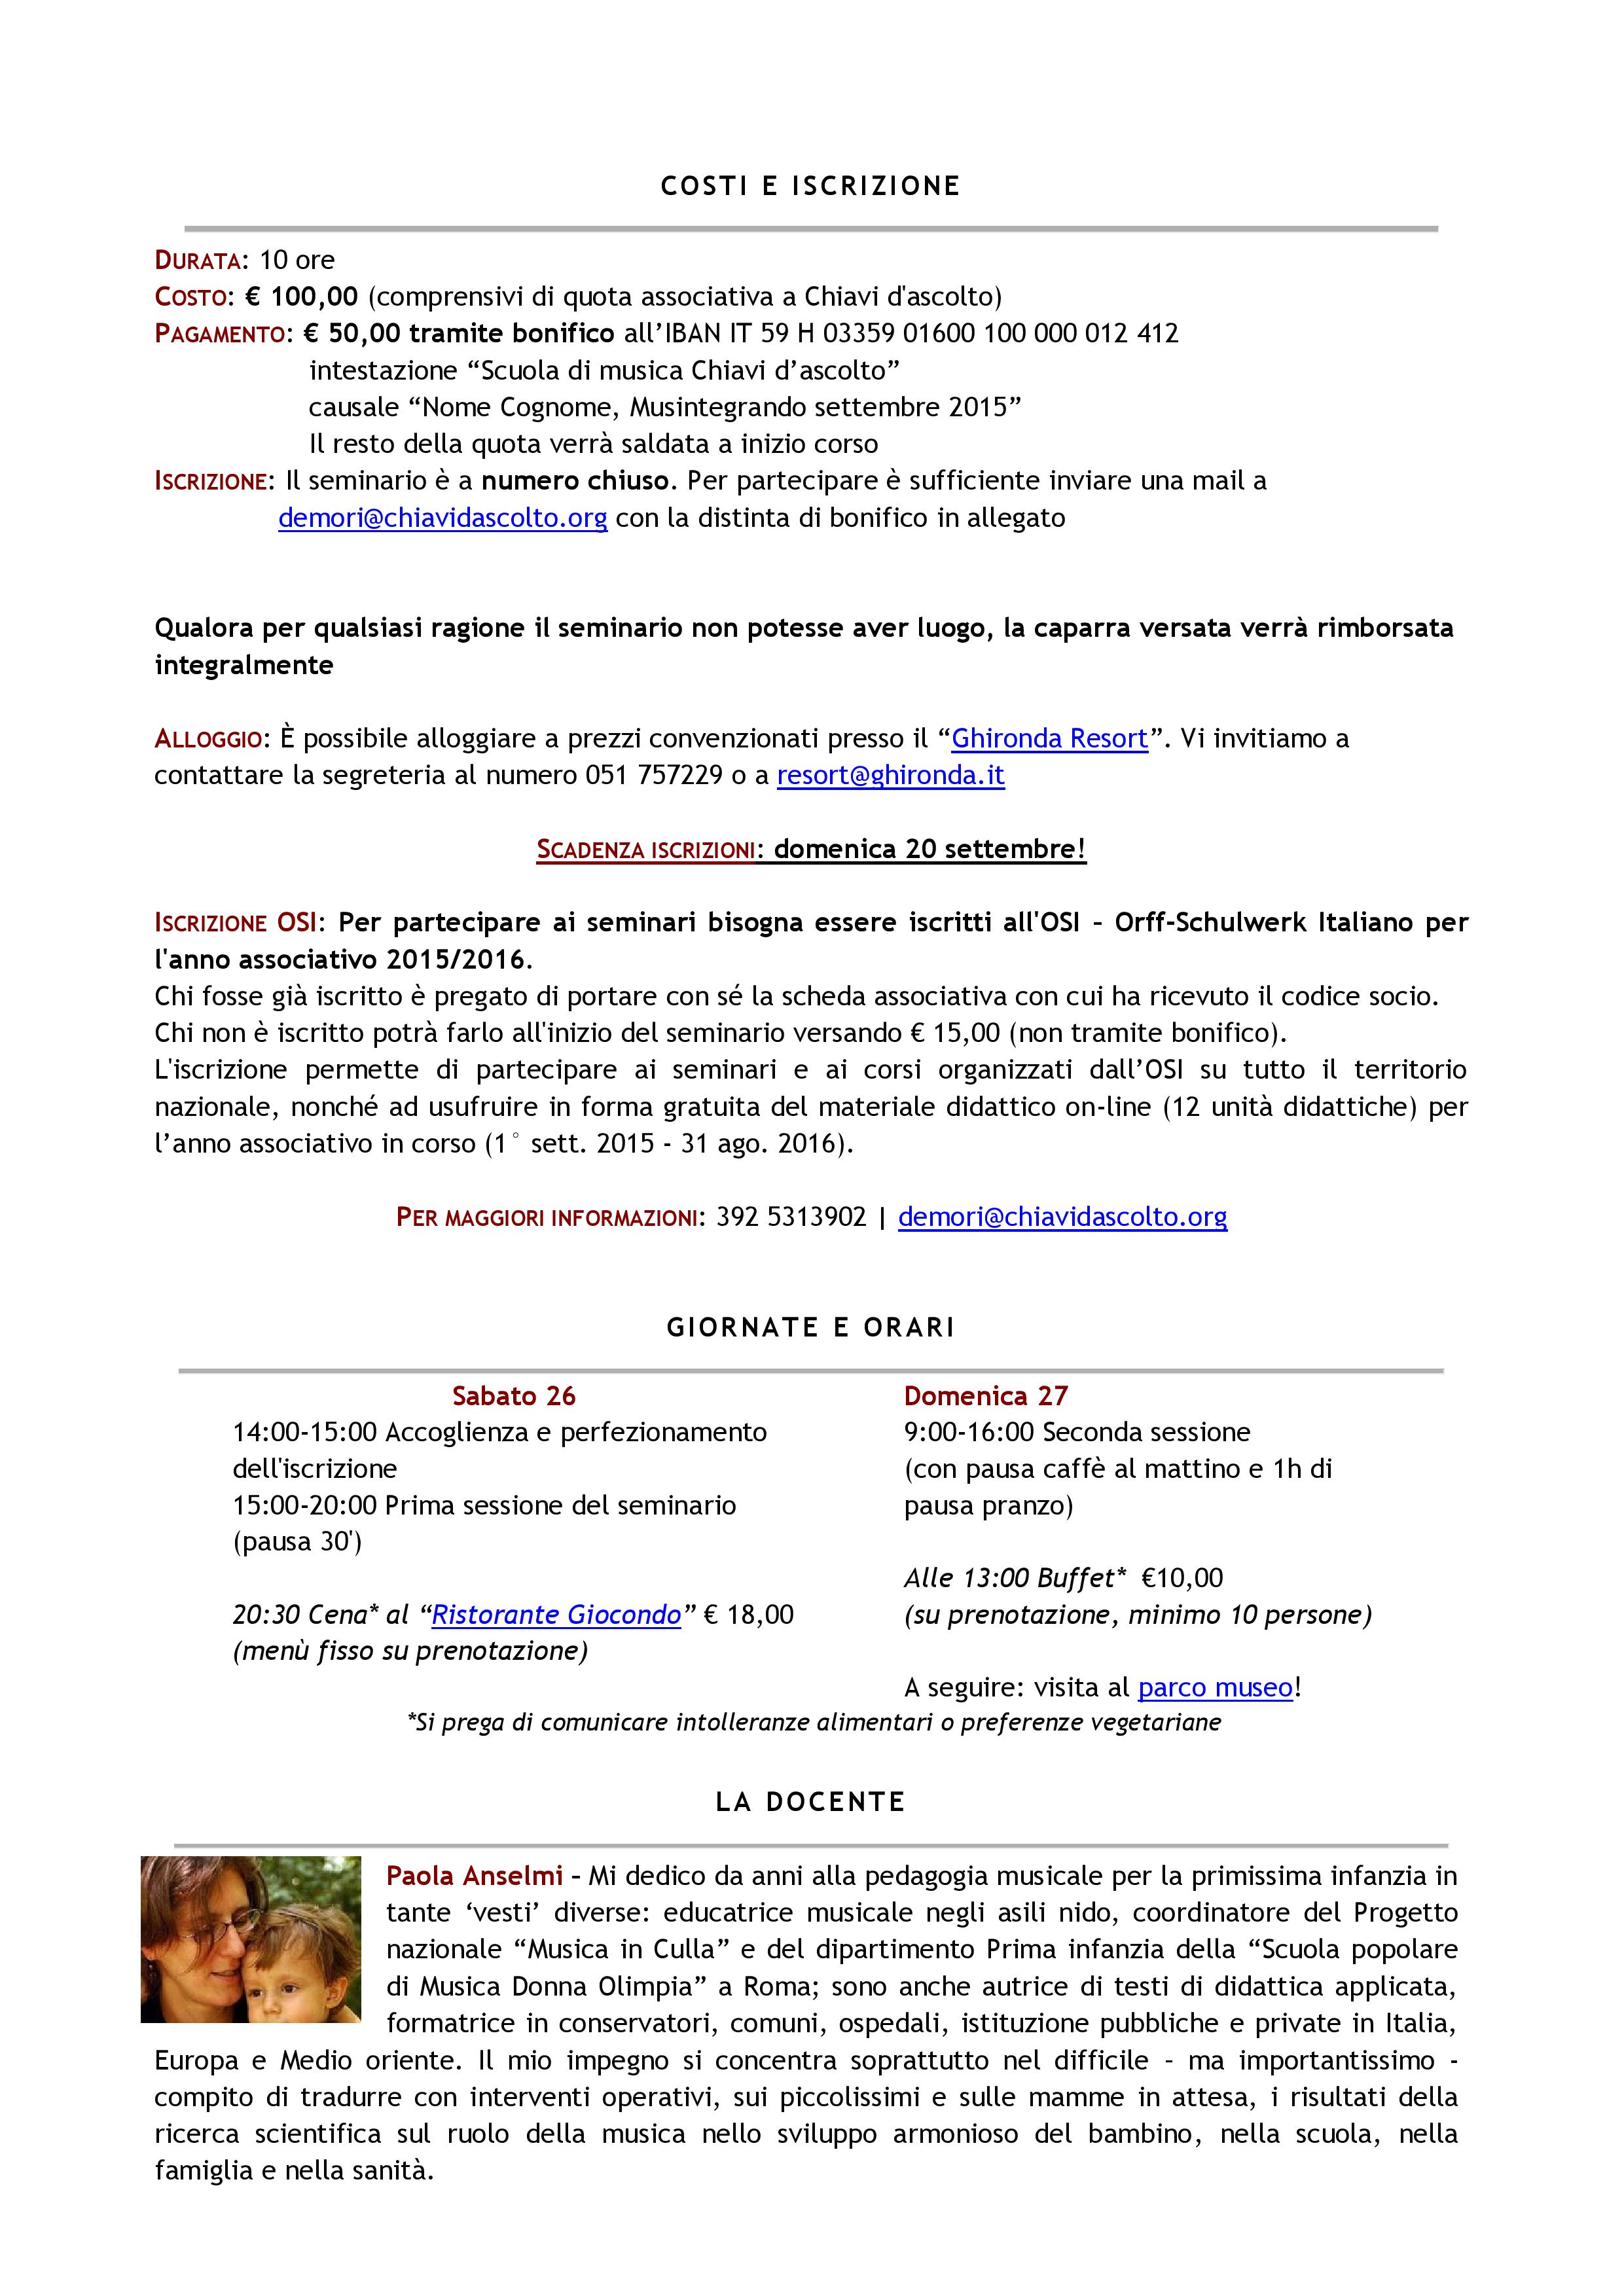 Volantino_MUSINTEGRANDO_Bologna_26-27sett2015-page-002